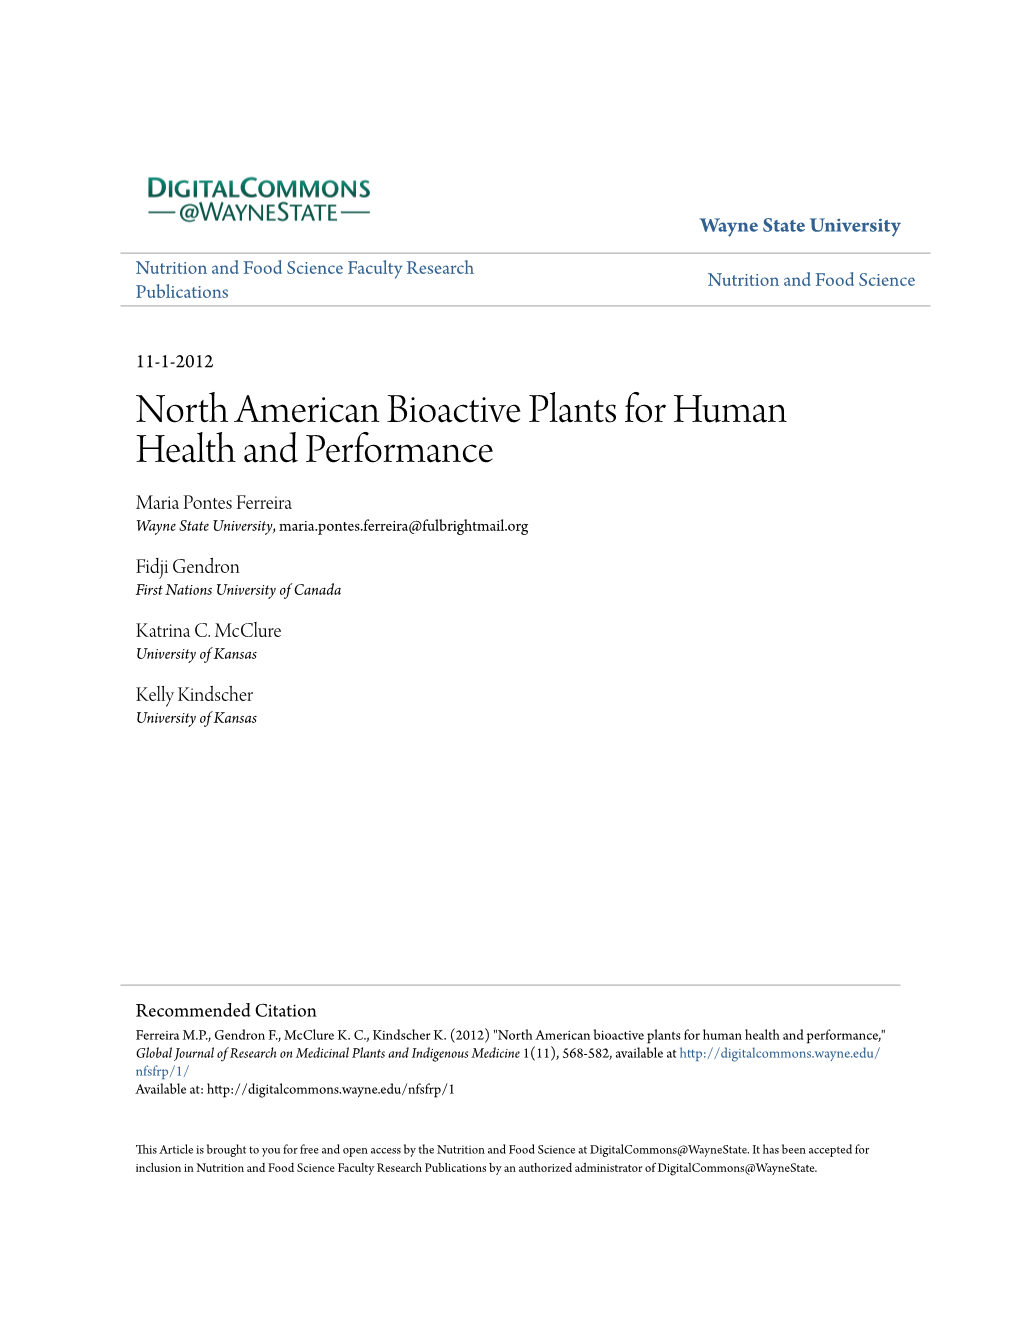 North American Bioactive Plants for Human Health and Performance Maria Pontes Ferreira Wayne State University, Maria.Pontes.Ferreira@Fulbrightmail.Org